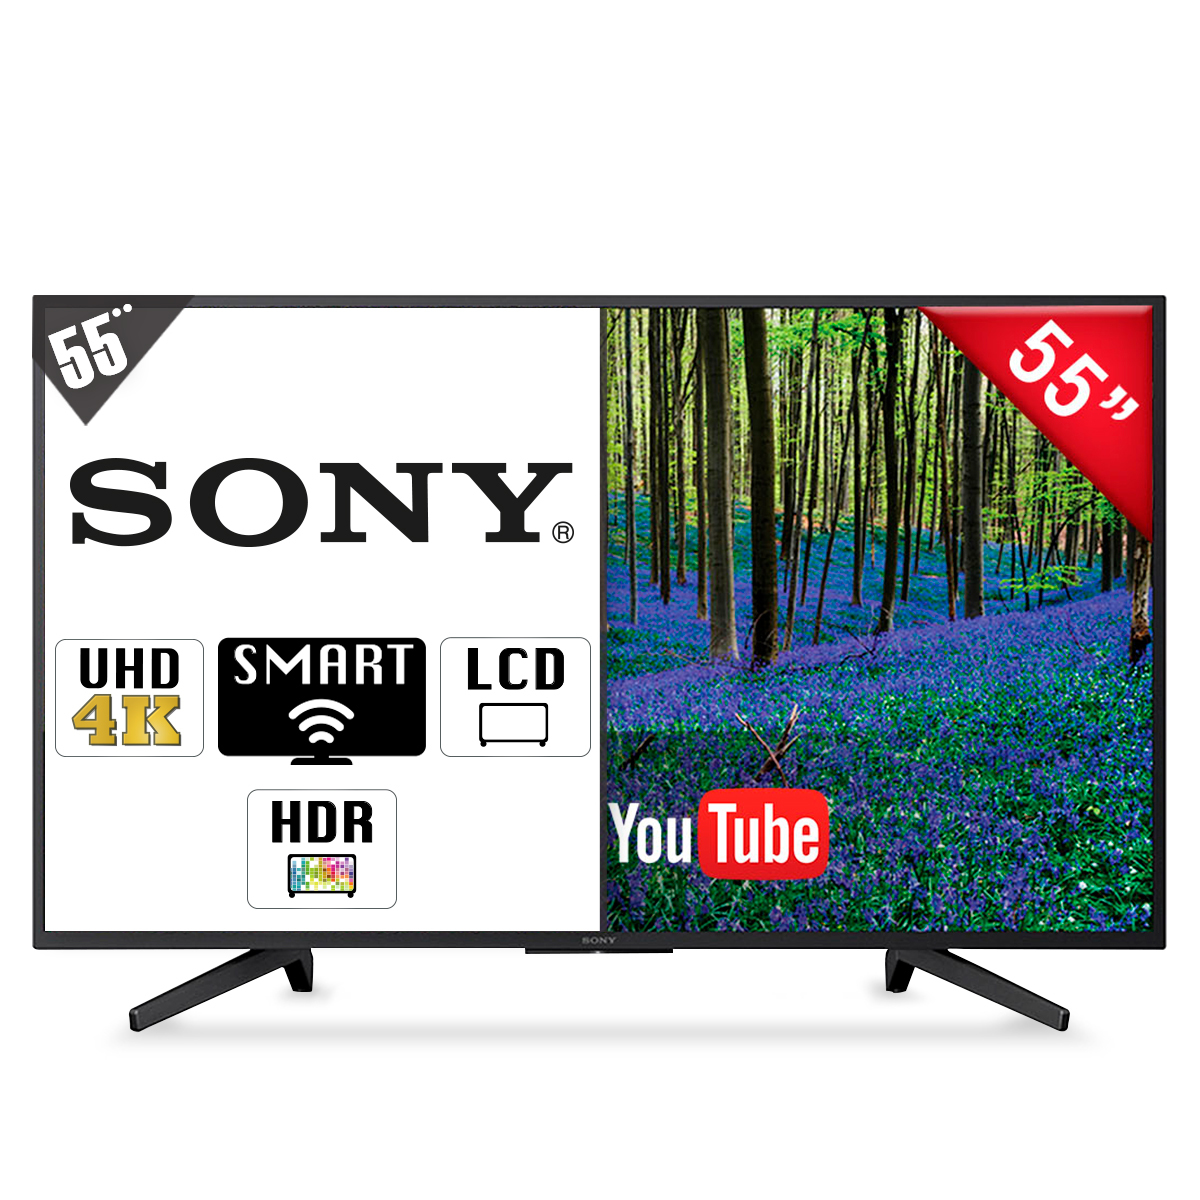 Sony 55 Pulgadas Ultra HD - Alto Rango Dinámico 4K (HDR) - Smart LED TV -  FULL Android - Características, Opiniones